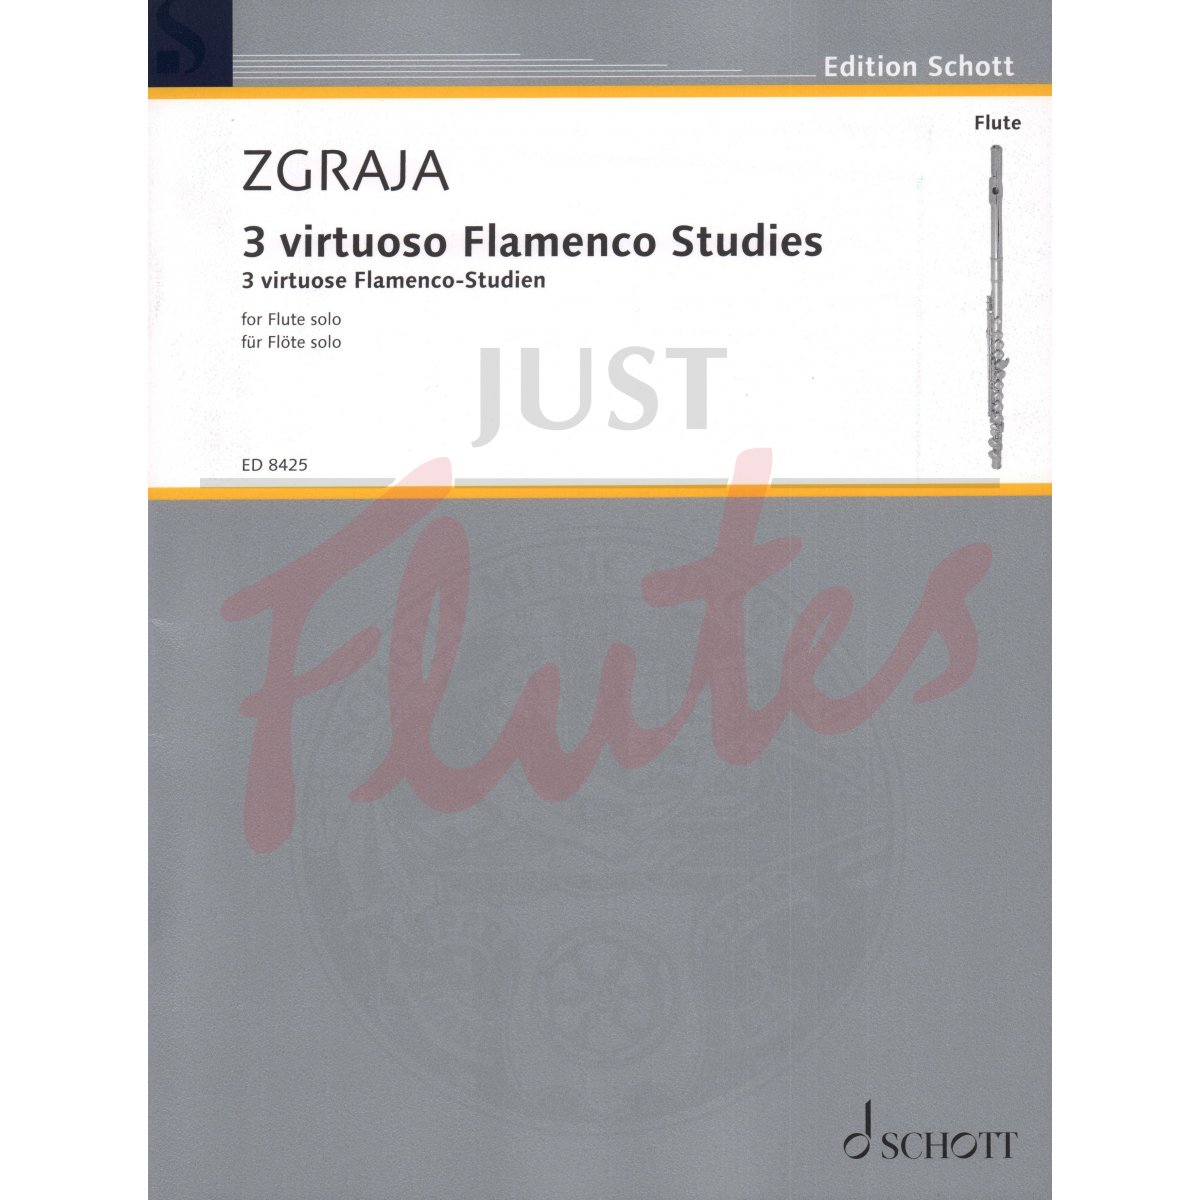 3 Virtuoso Flamenco Studies for Flute